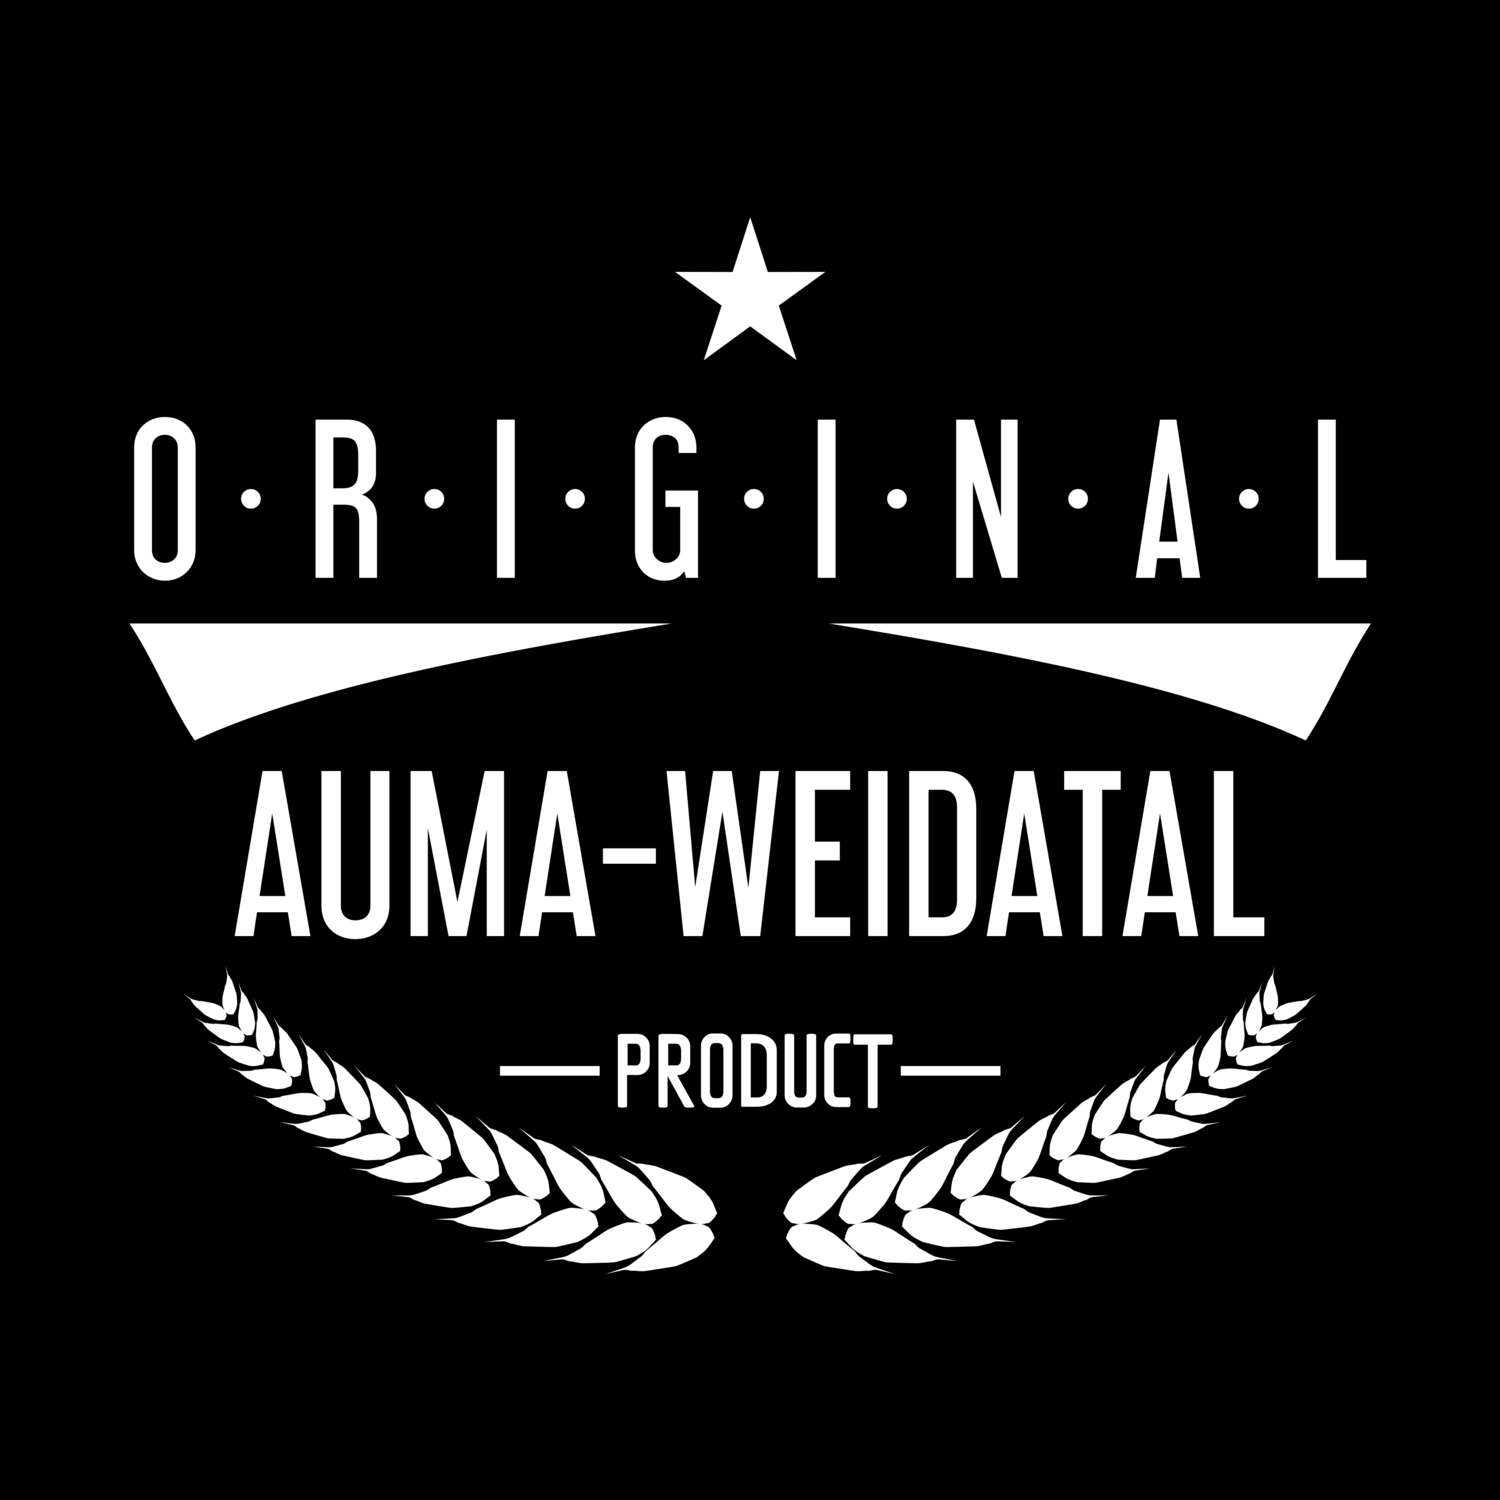 Auma-Weidatal T-Shirt »Original Product«